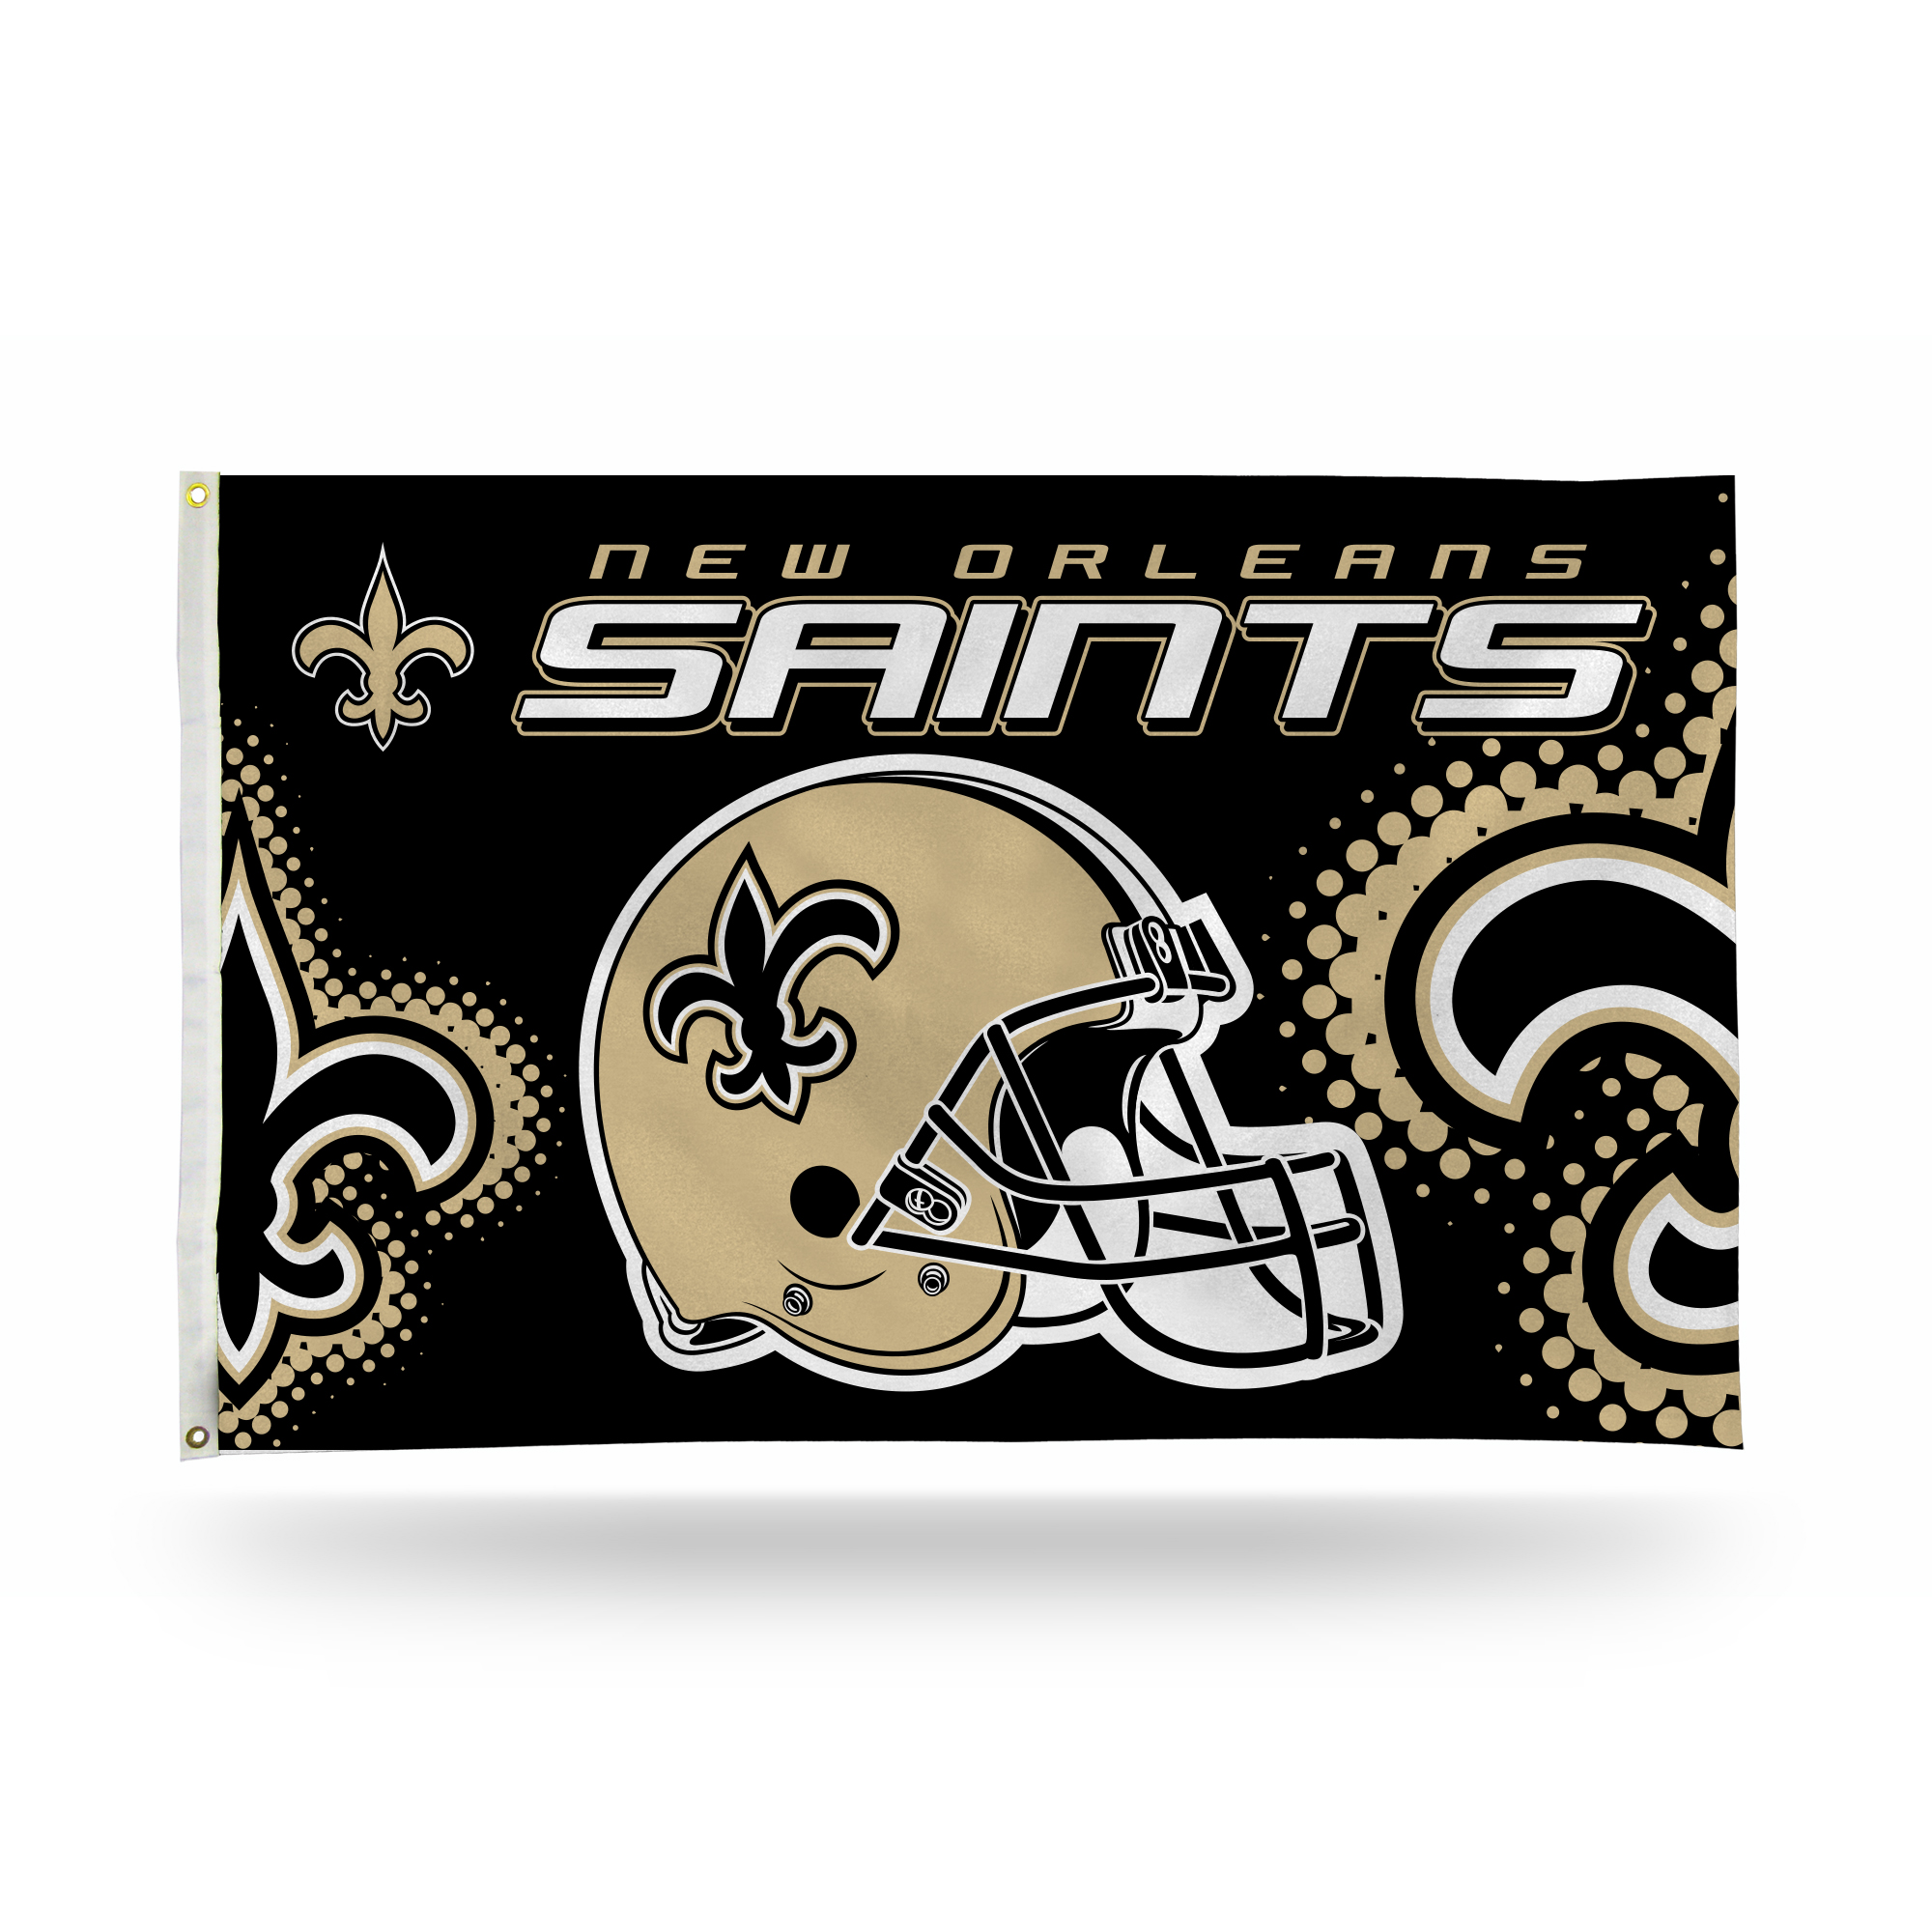 Rico NFL Rico Industries New Orleans Saints Helmet 3' x 5' Banner Flag